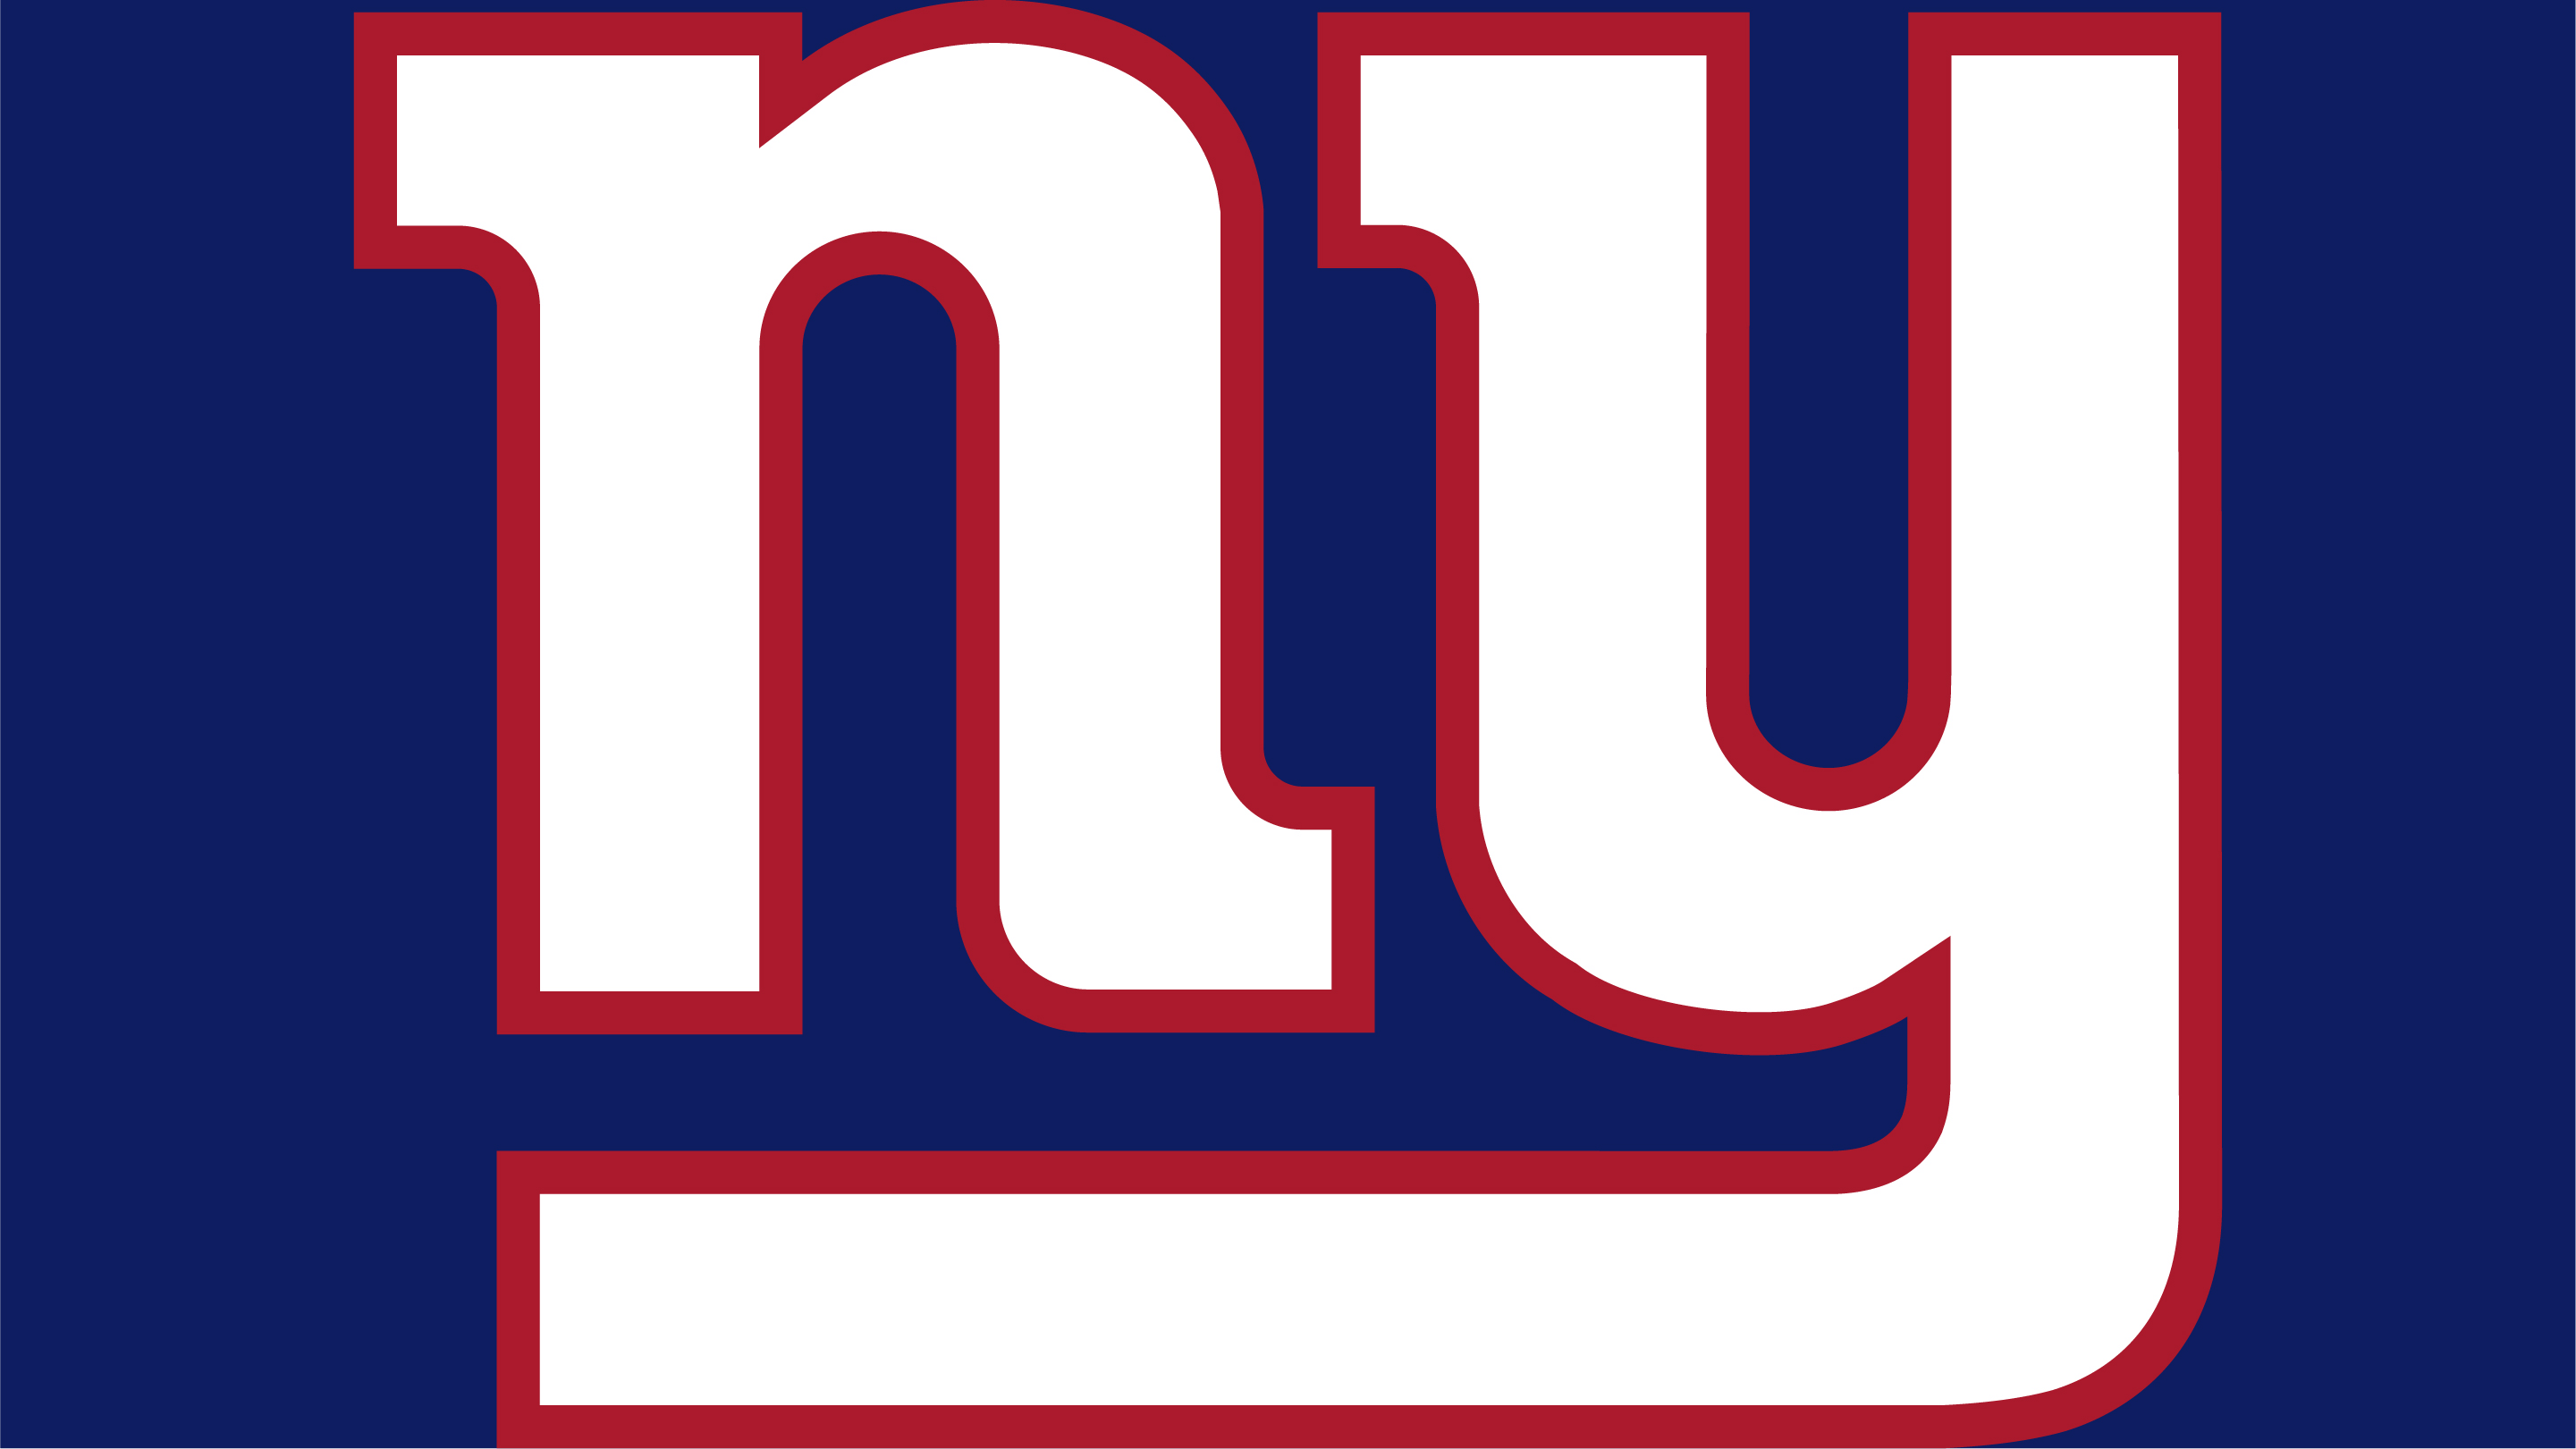 LETSGOYANKEES #GOBIGBLUE  New york giants, New york giants logo